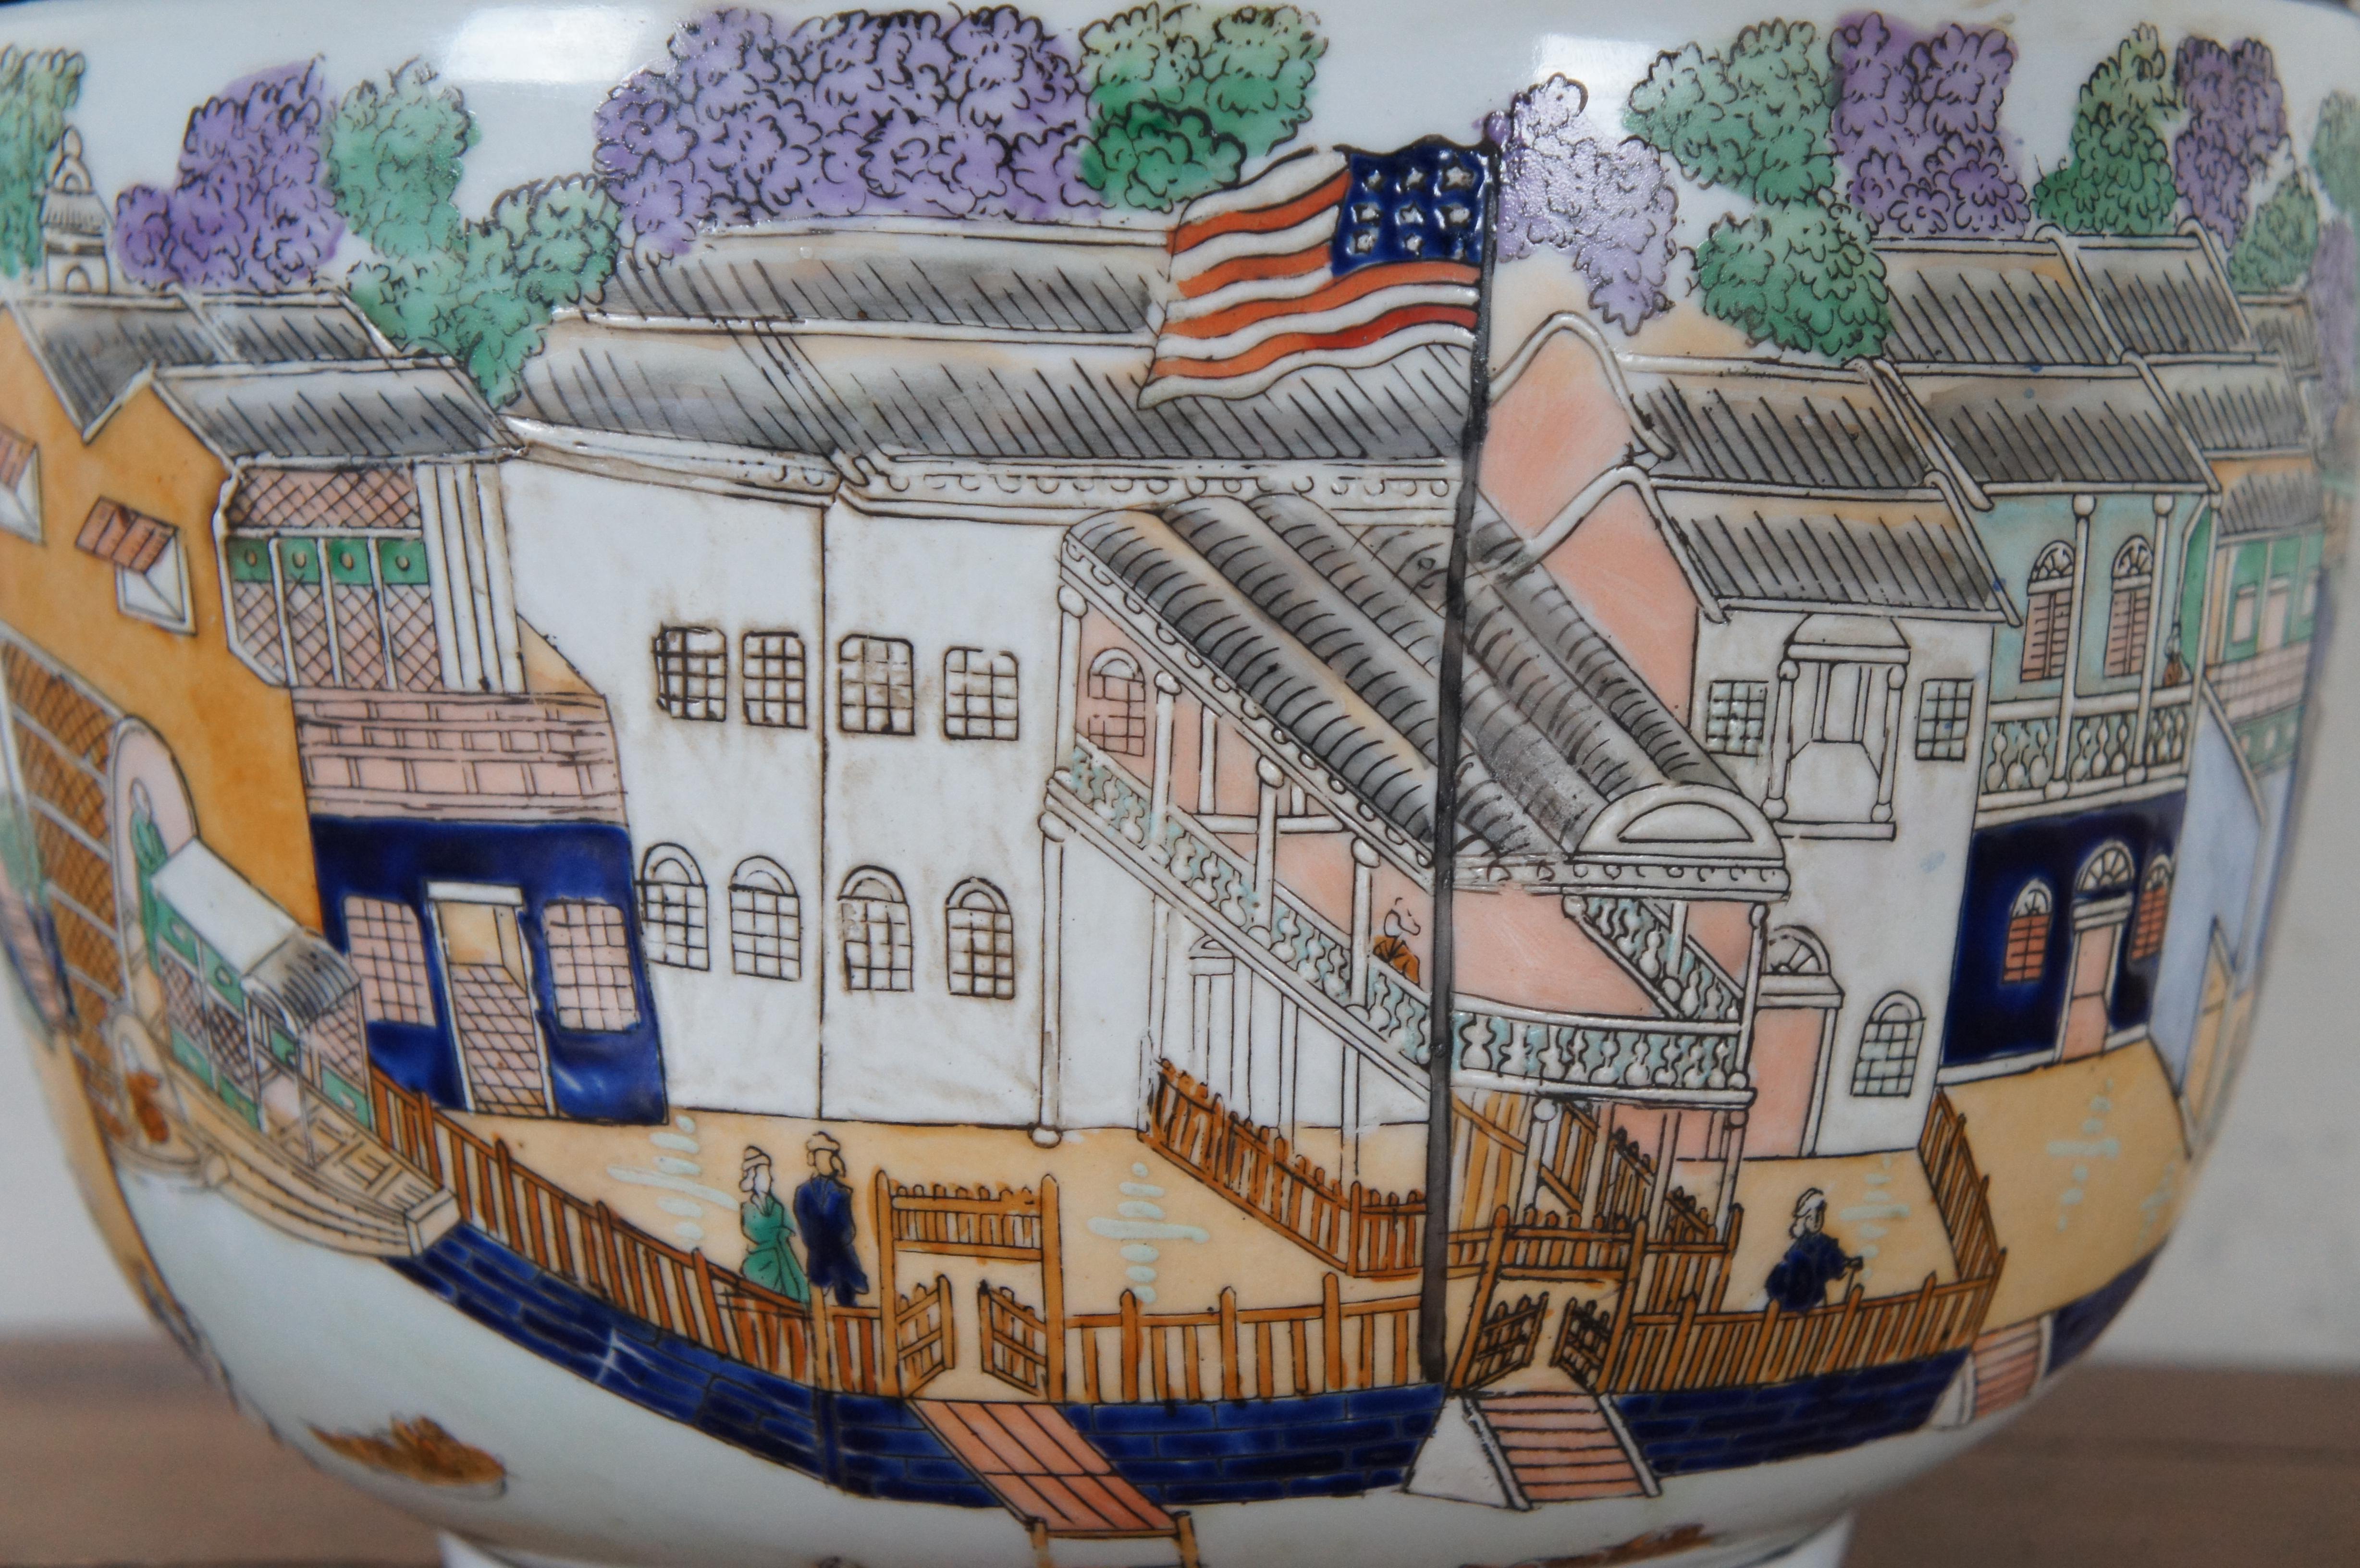 Chinese Export Polychrome Hong Cityscape Lidded Urn Pot Jar Bowl 14